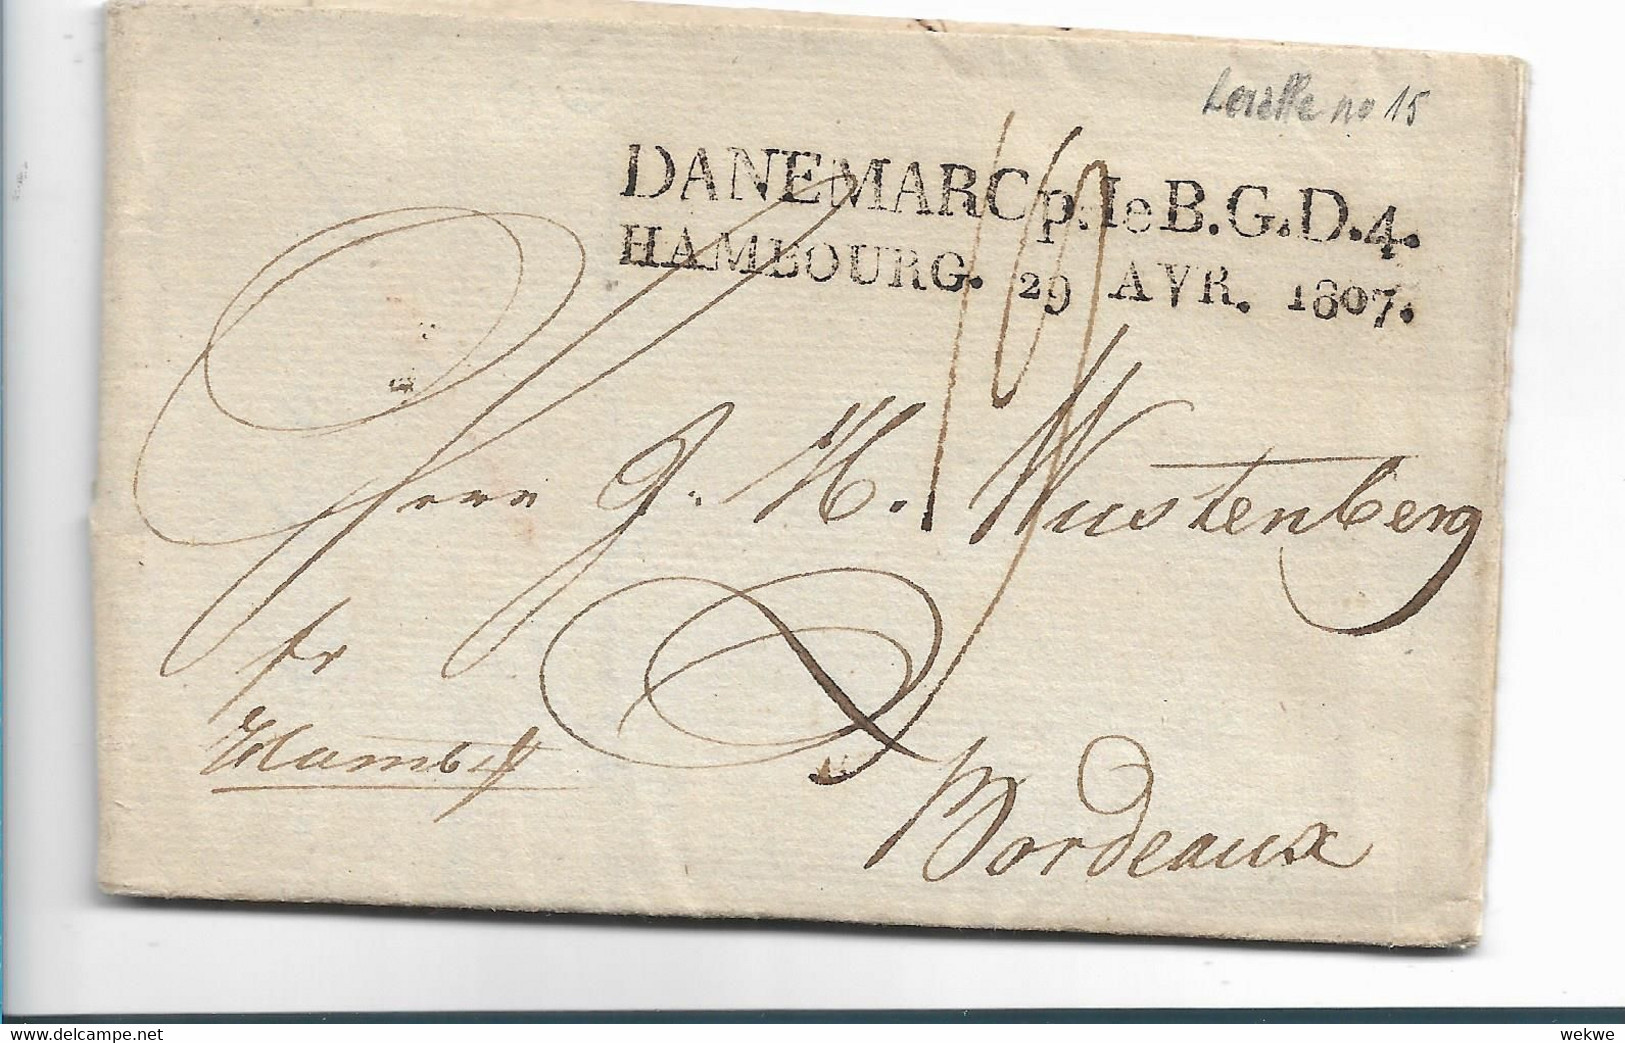 DK-V016 / DÄNEMARK P. Le B.G.D. 4. HAMBOURG  29 AVR 1807 Nach Bordeaux SELTEN - ...-1851 Voorfilatelie